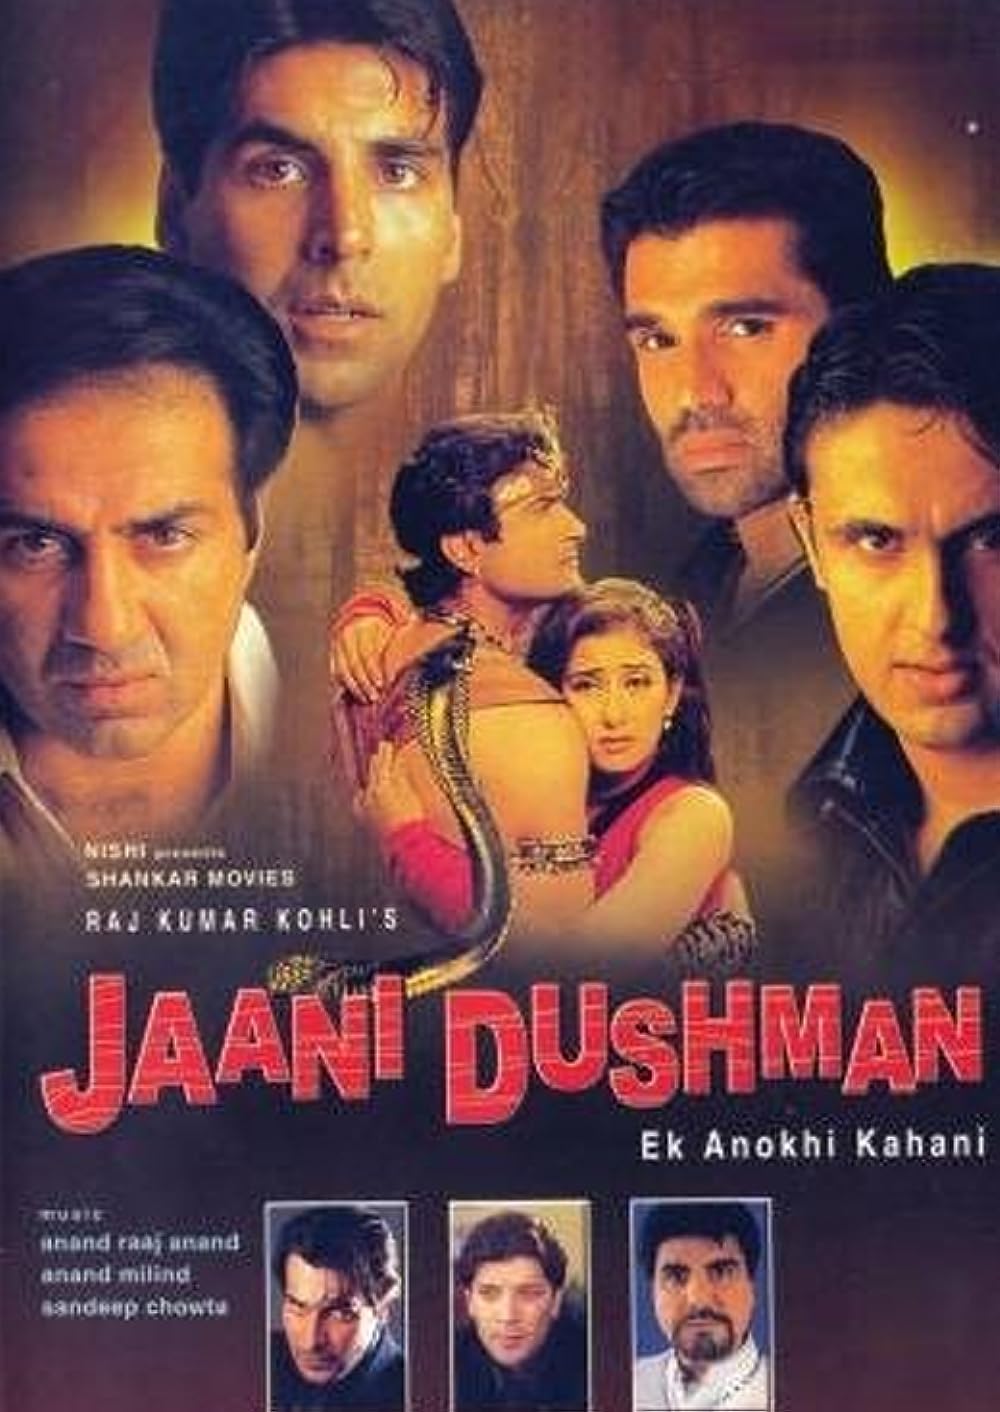 Jaani Dushman: Ek Anokhi Kahani best horror movies on amazon prime